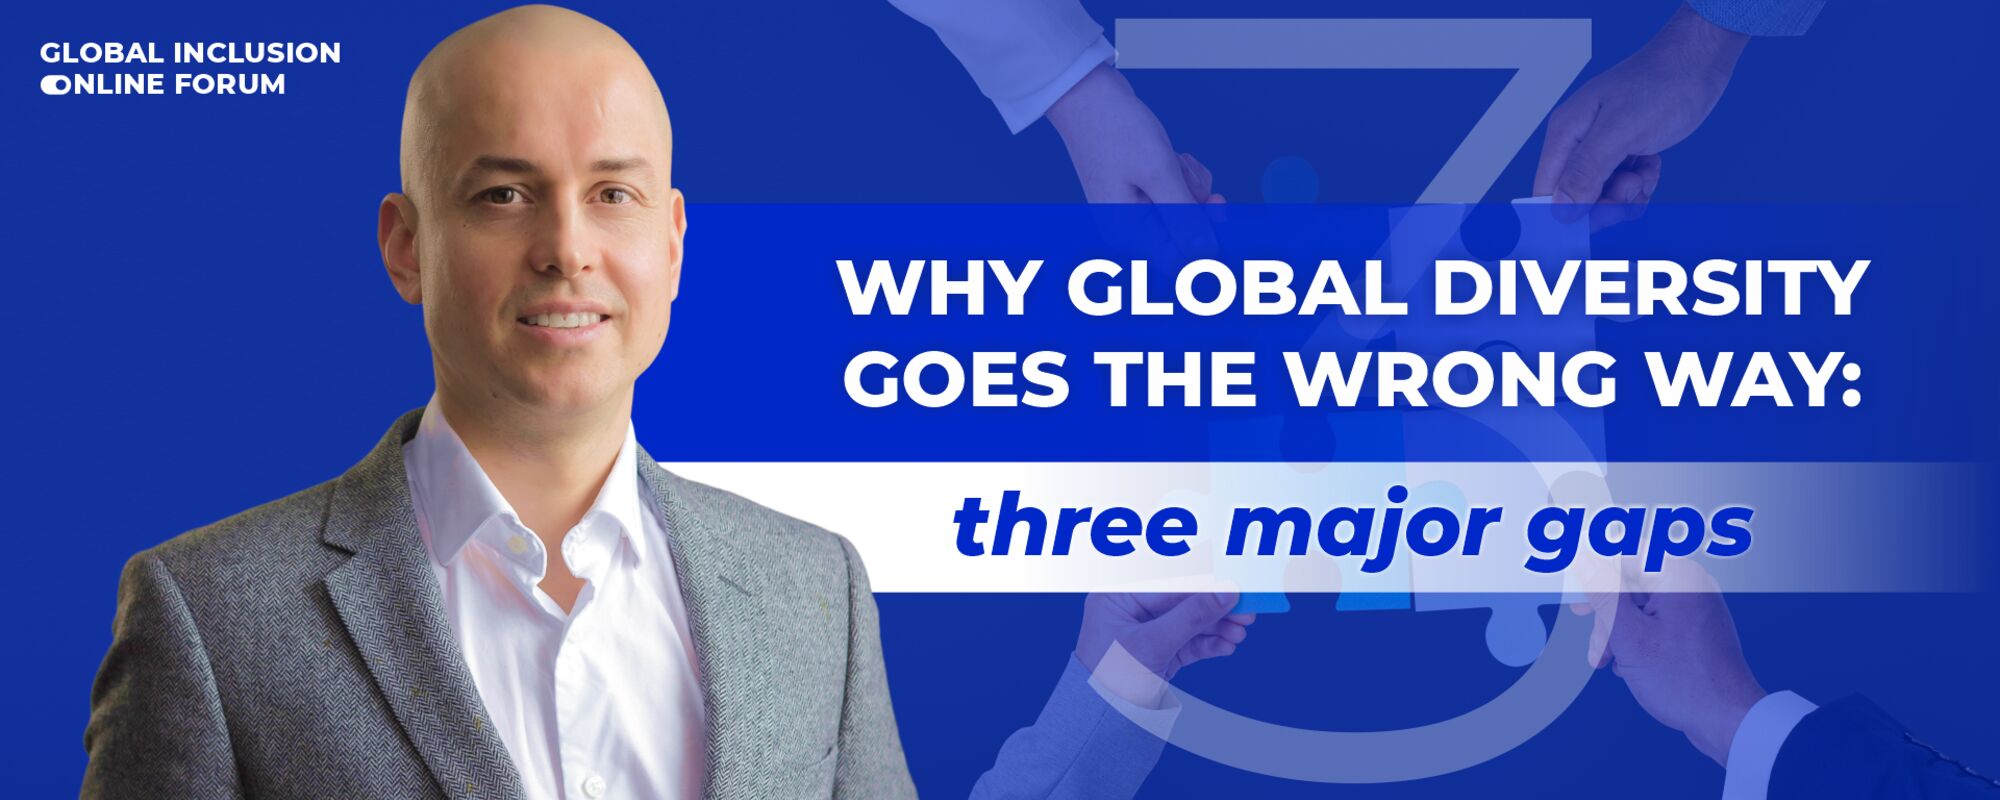 WHY GLOBAL DIVERSITY GOES THE WRONG WAY: THREE MAJOR GAPS